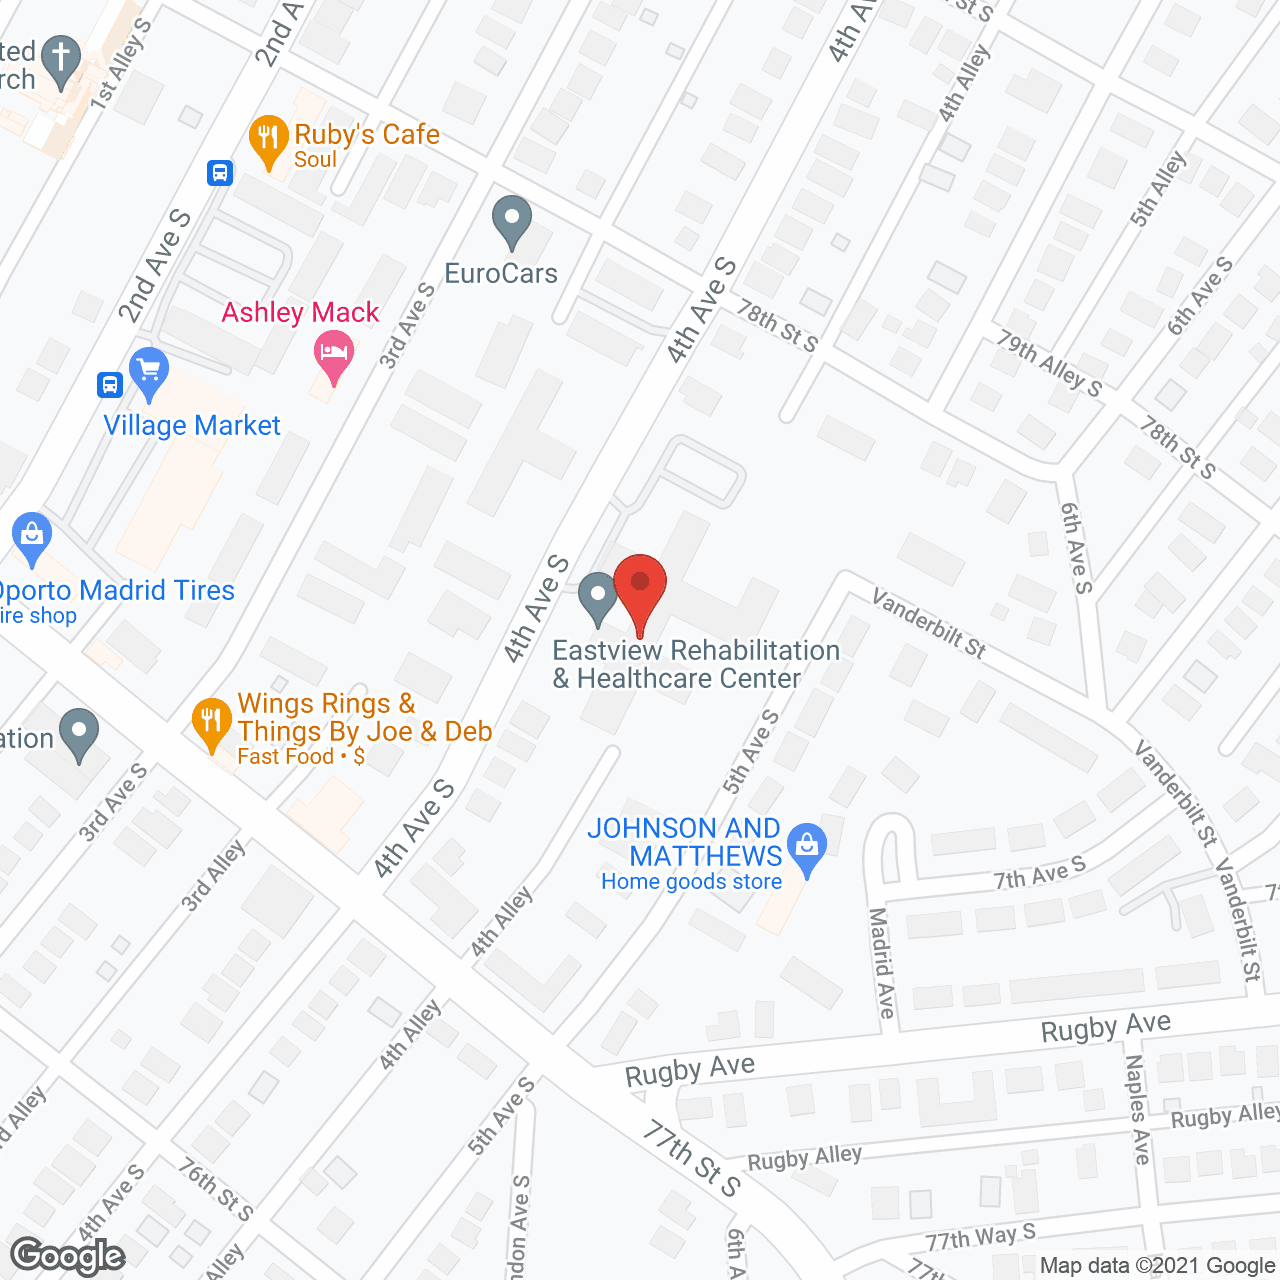 Eastview Rehab & Healthcare Center in google map